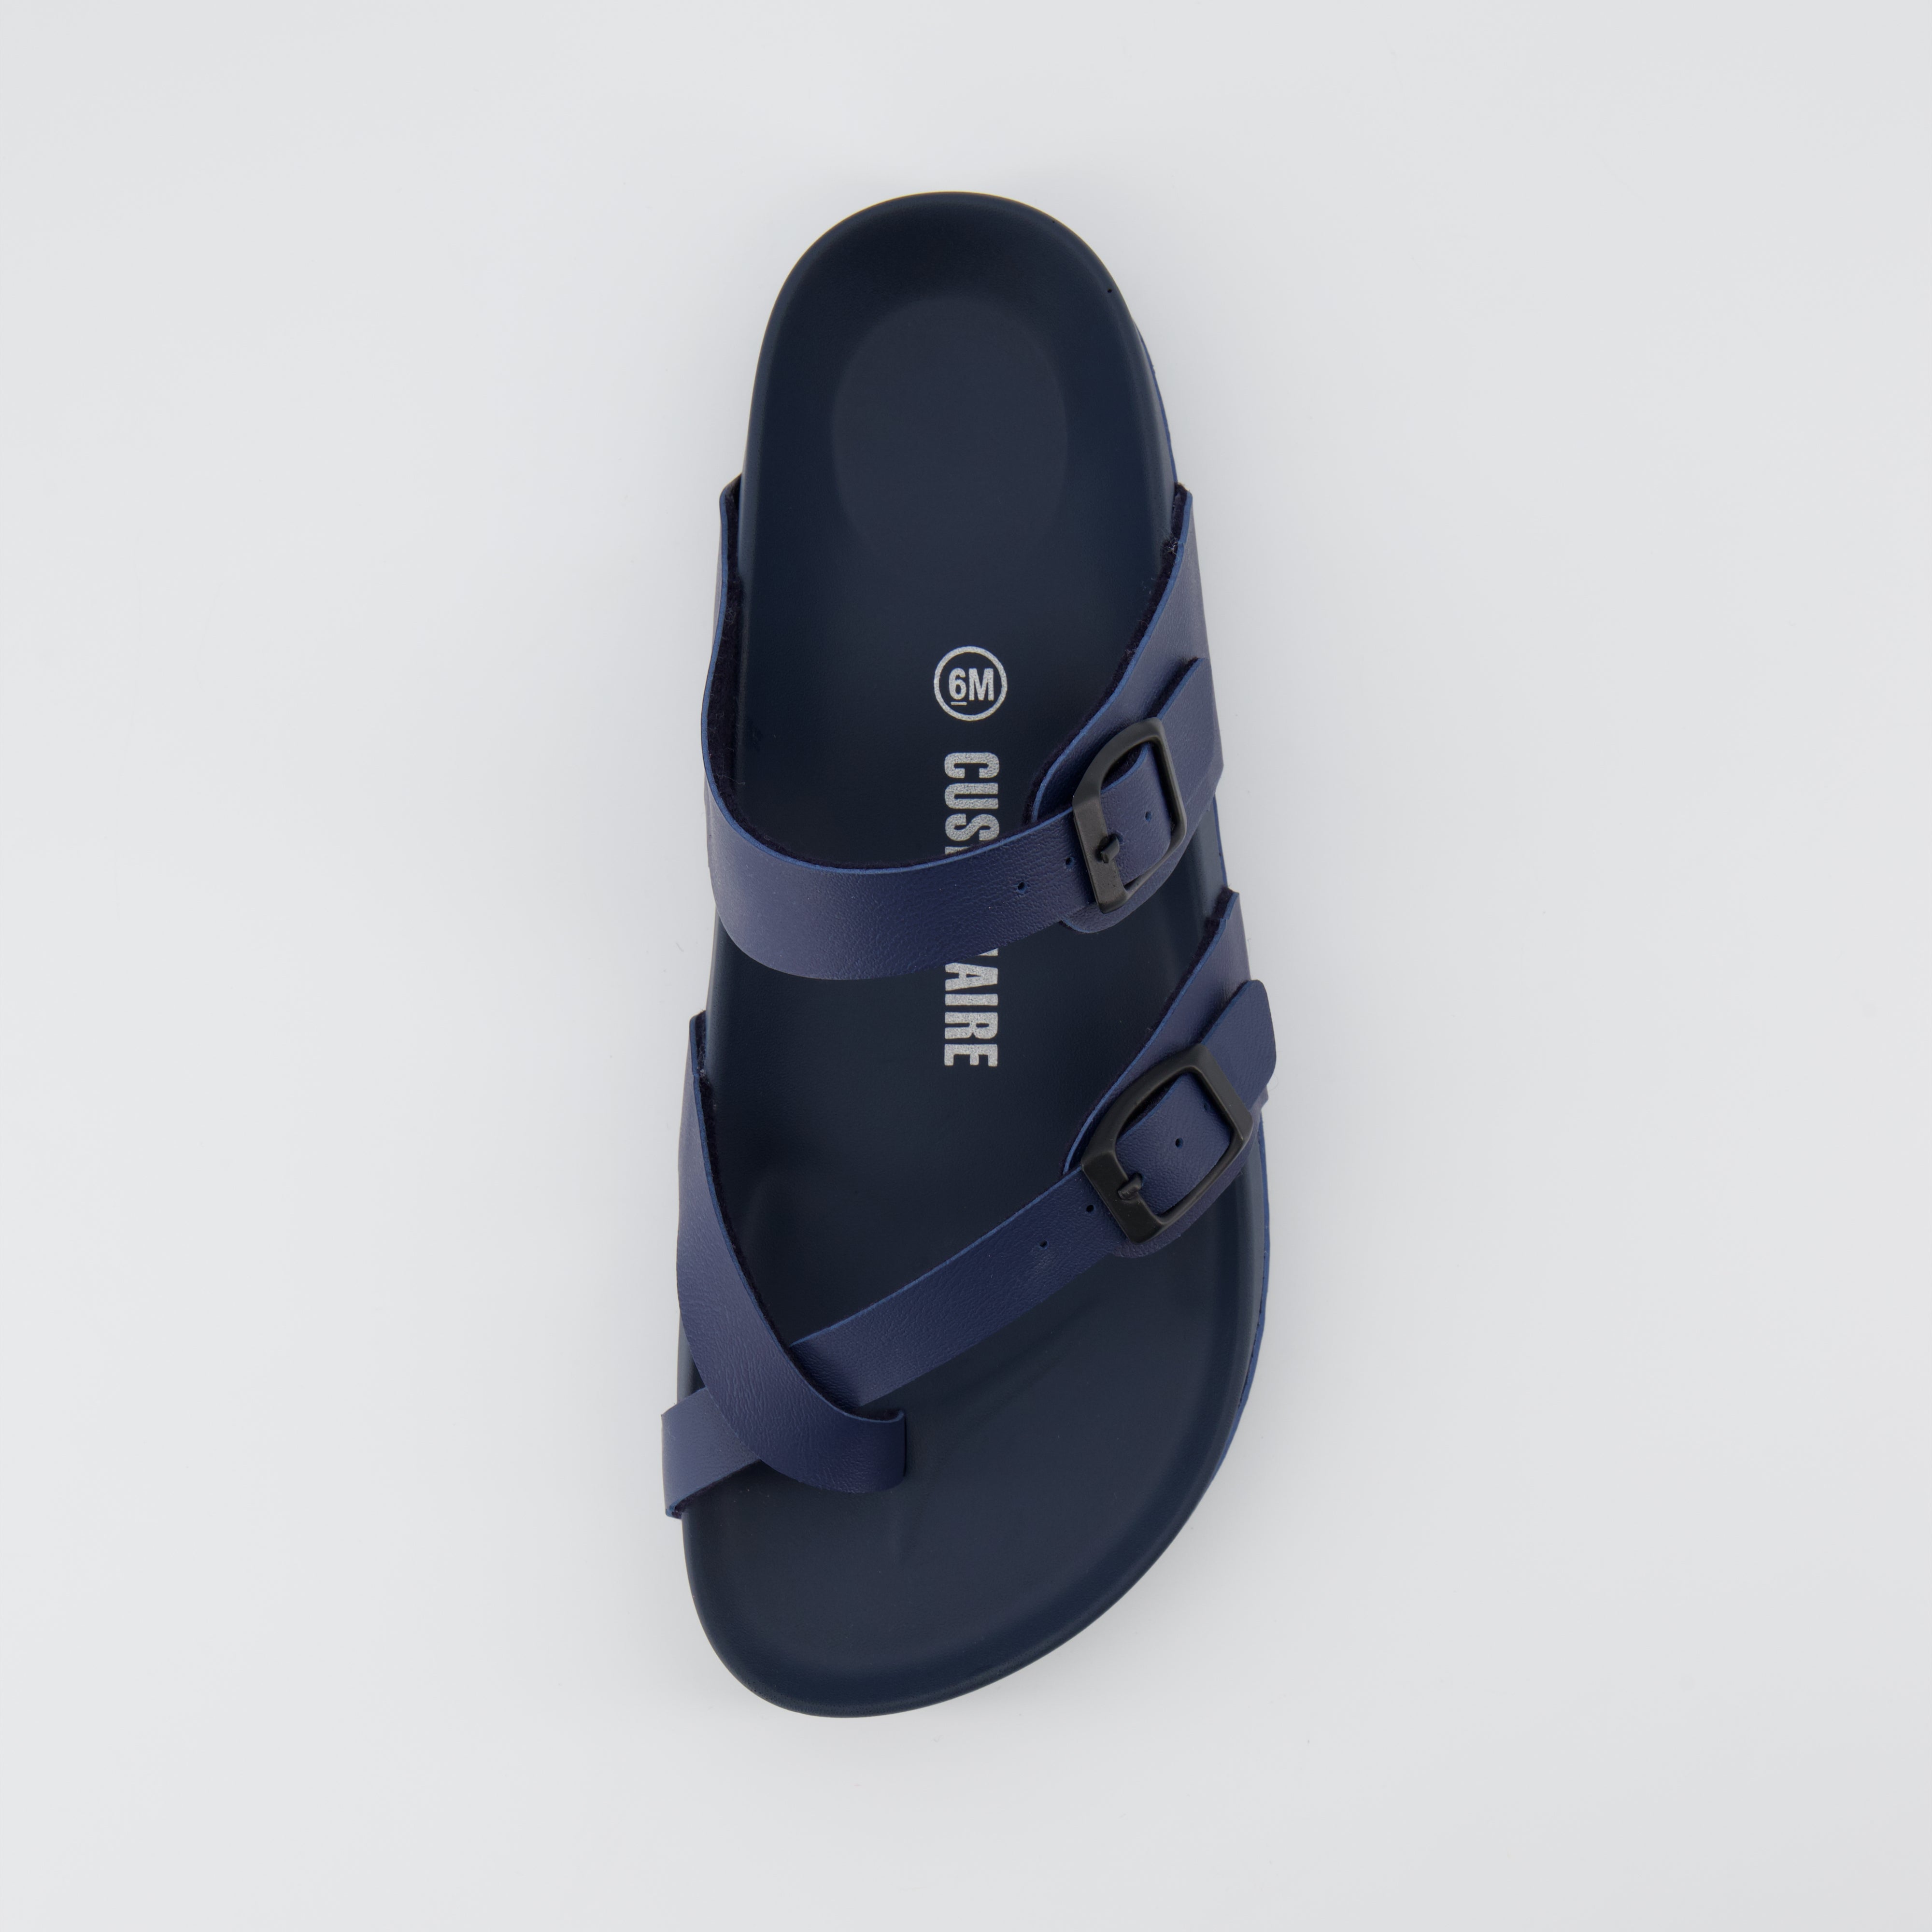 Laker EVA Footbed Sandal